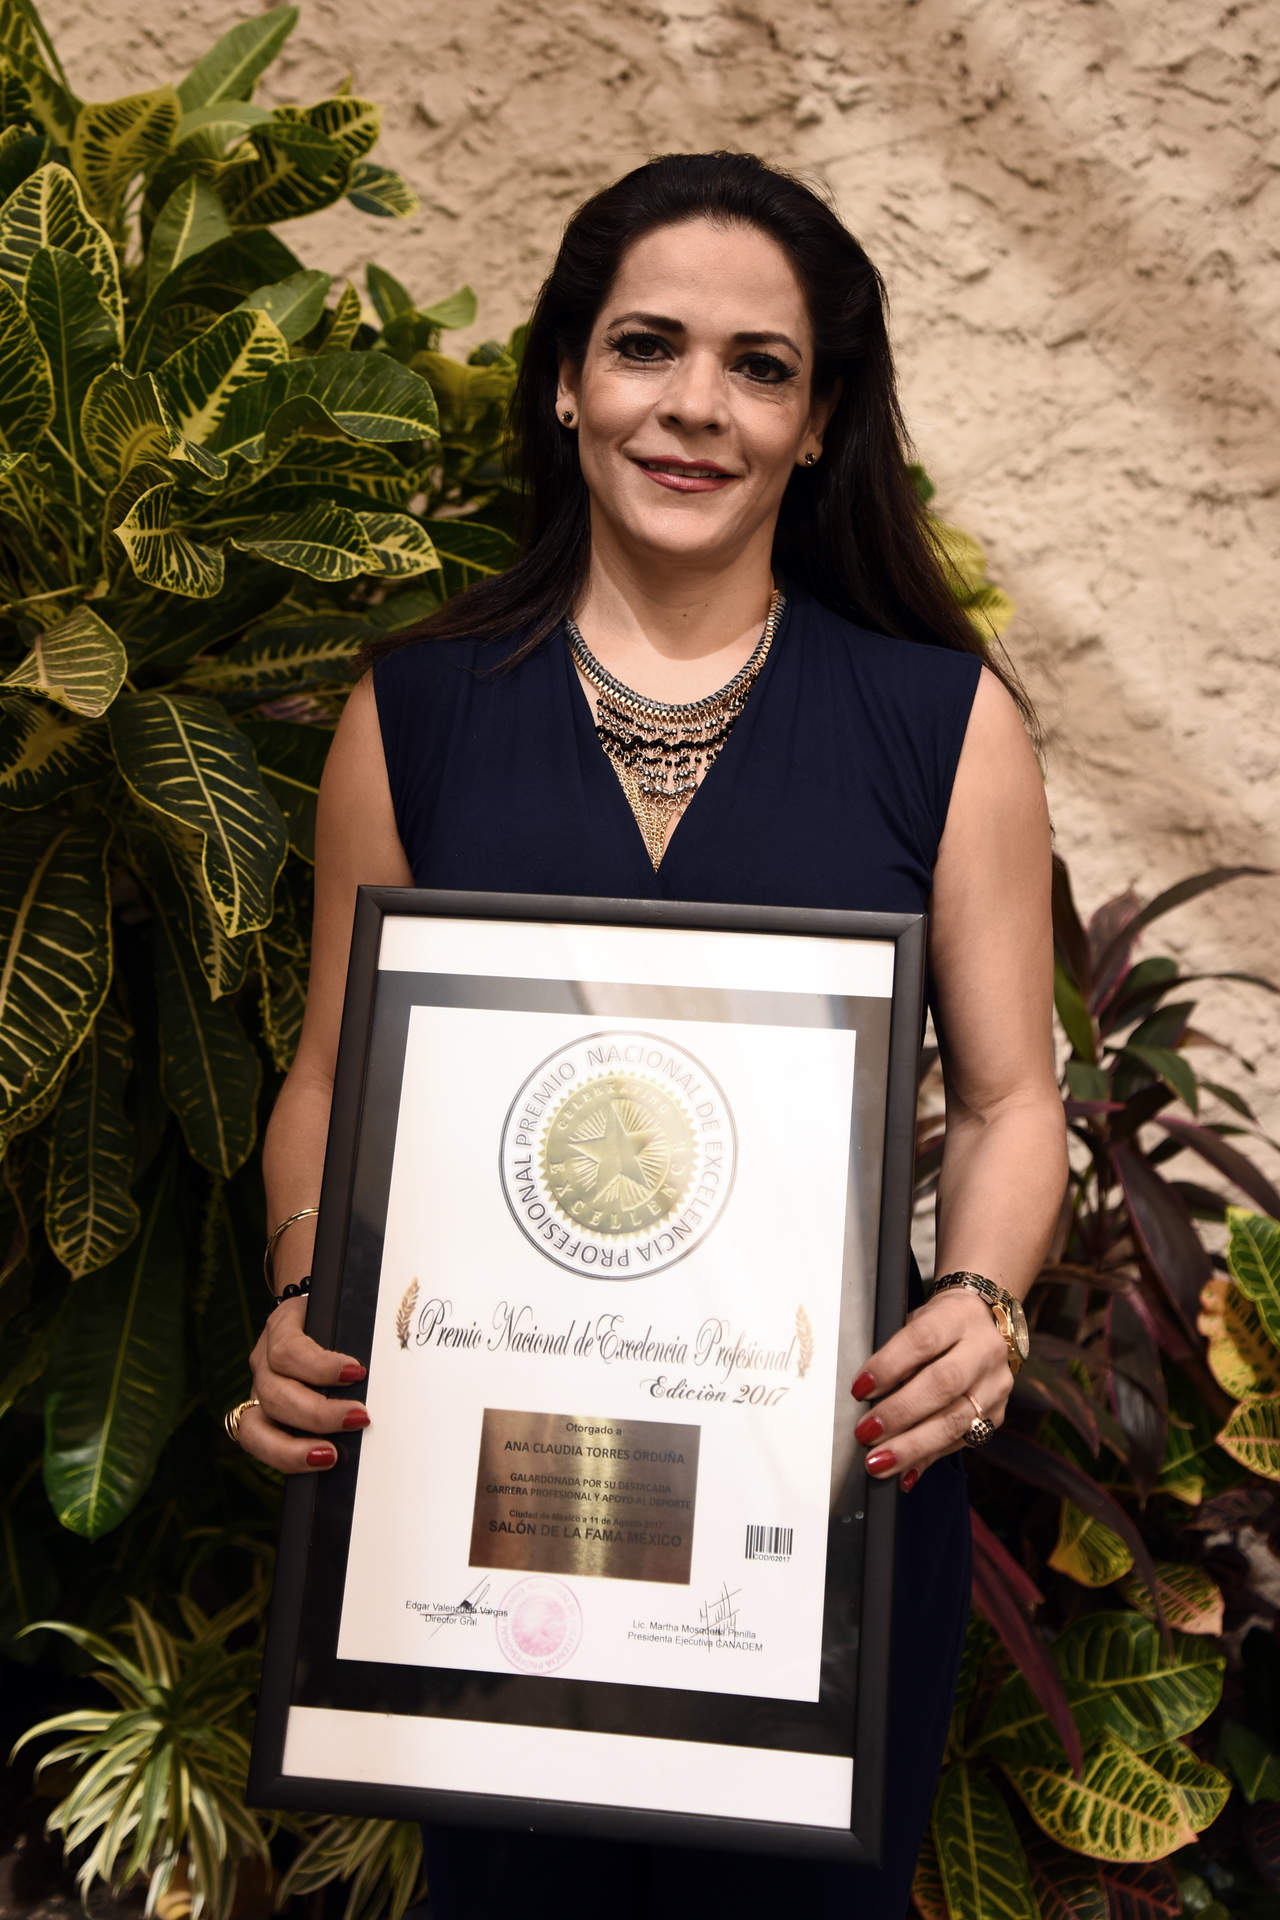 Ana Claudia Torres Orduña recibió el Premio Nacional de Excelencia Profesional. 